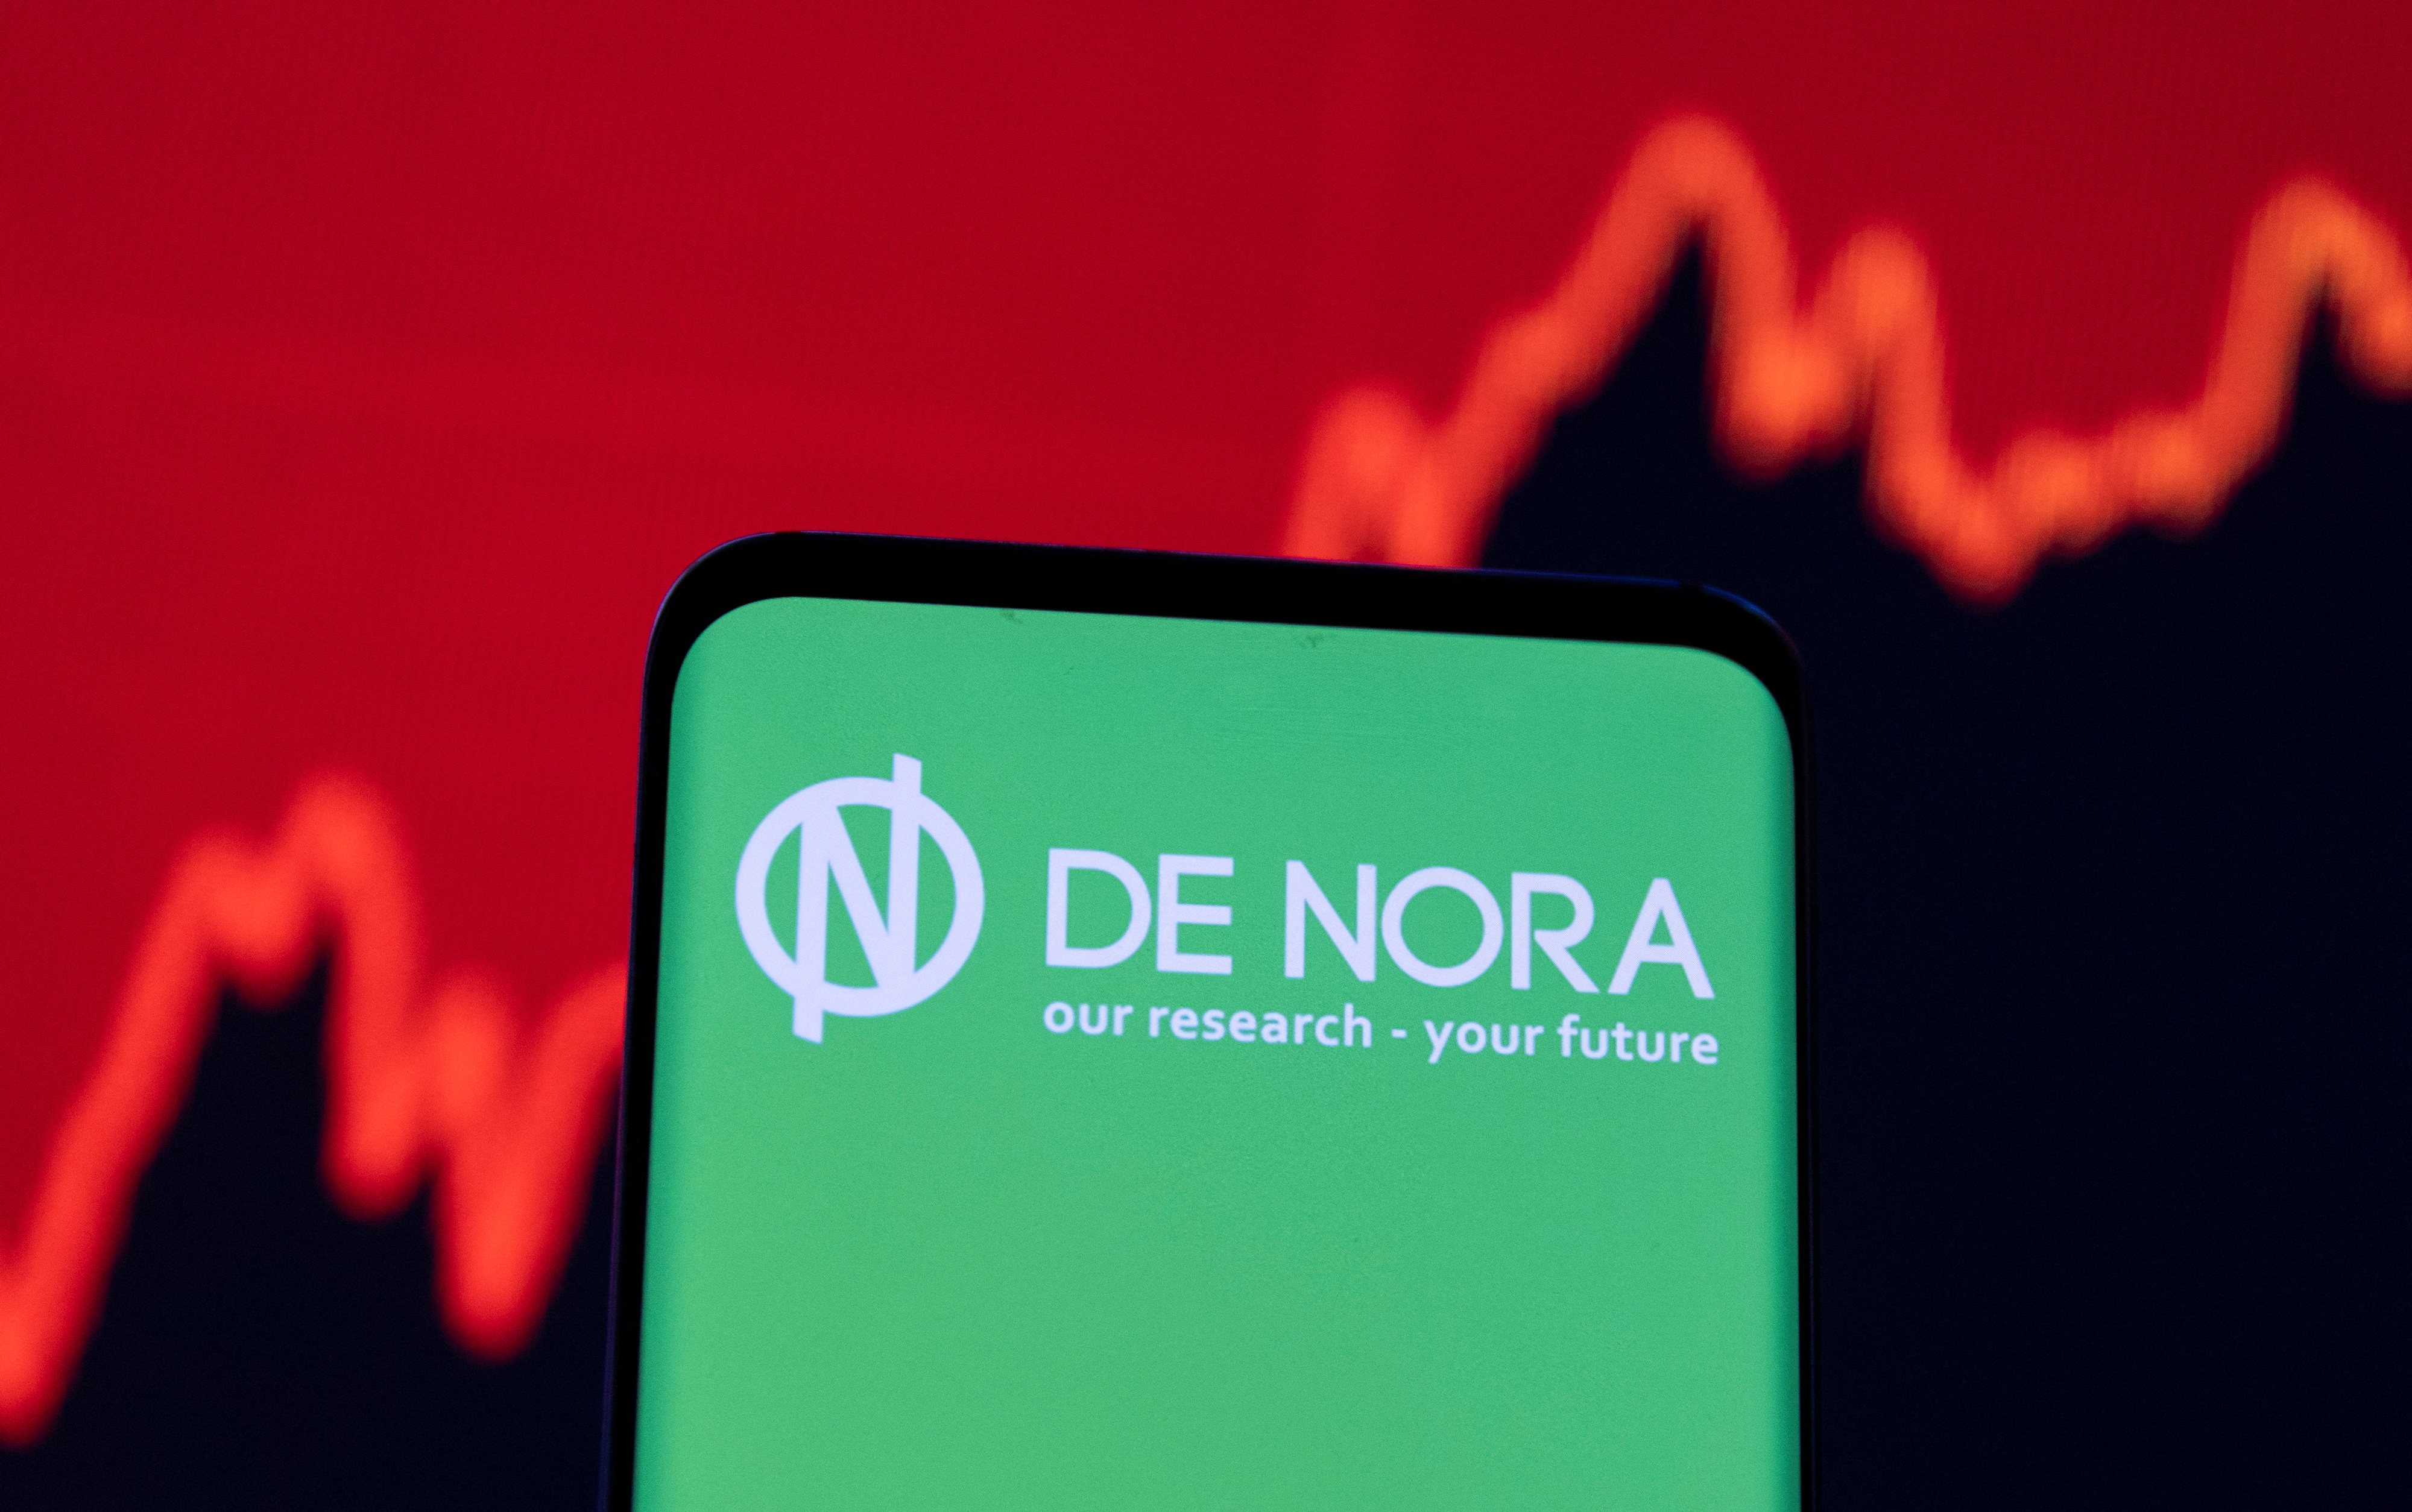 Illustration shows De Nora logo and stock graph